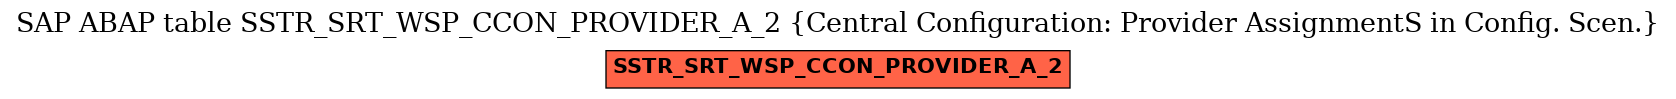 E-R Diagram for table SSTR_SRT_WSP_CCON_PROVIDER_A_2 (Central Configuration: Provider AssignmentS in Config. Scen.)